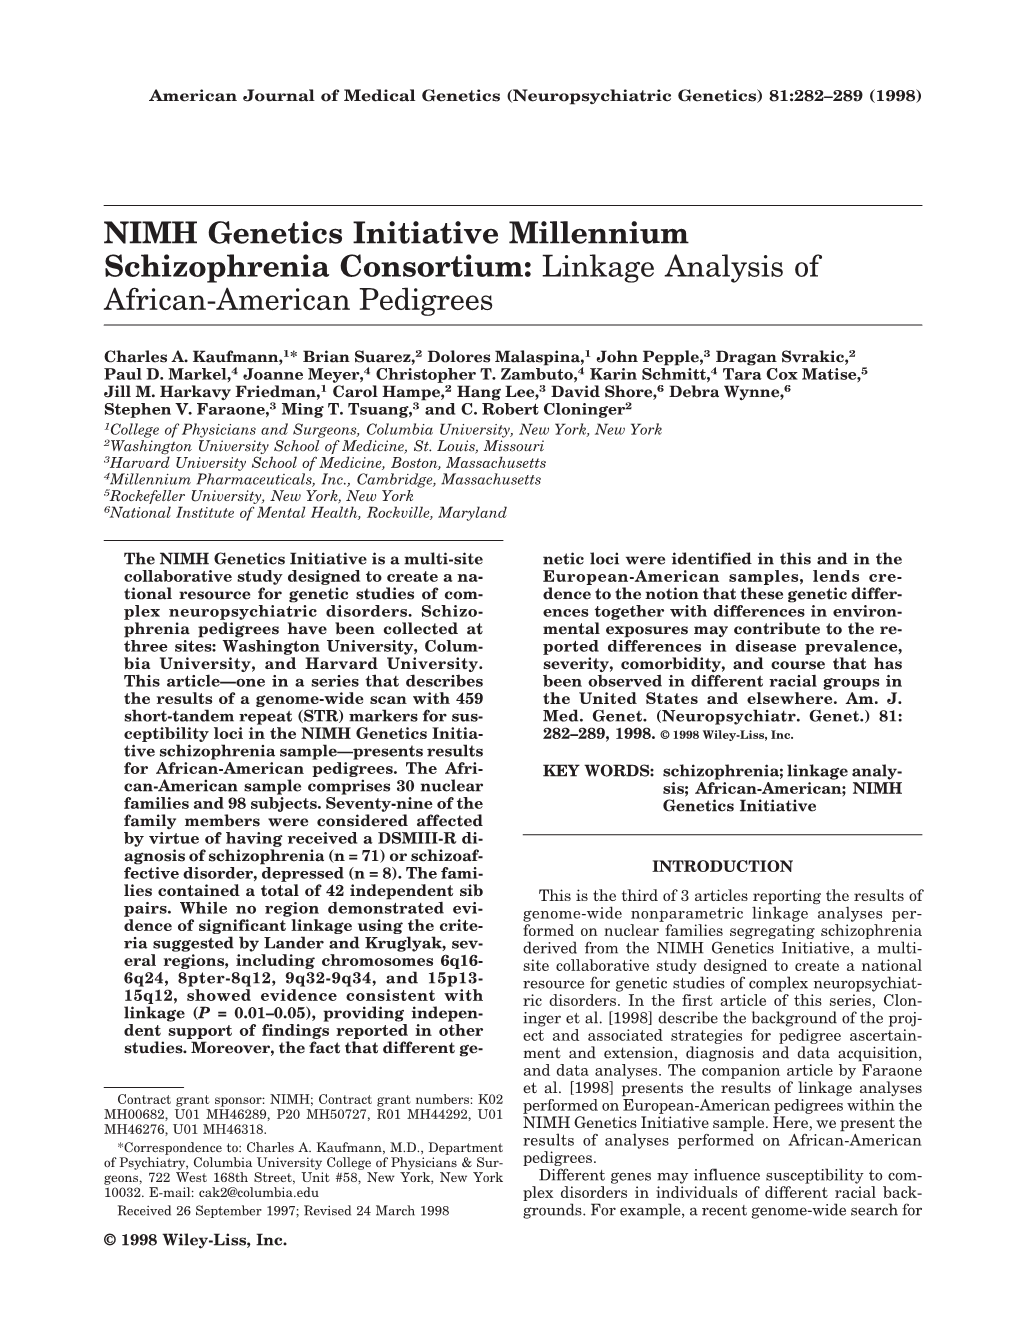 NIMH Genetics Initiative Millennium Schizophrenia Consortium: Linkage Analysis of African-American Pedigrees